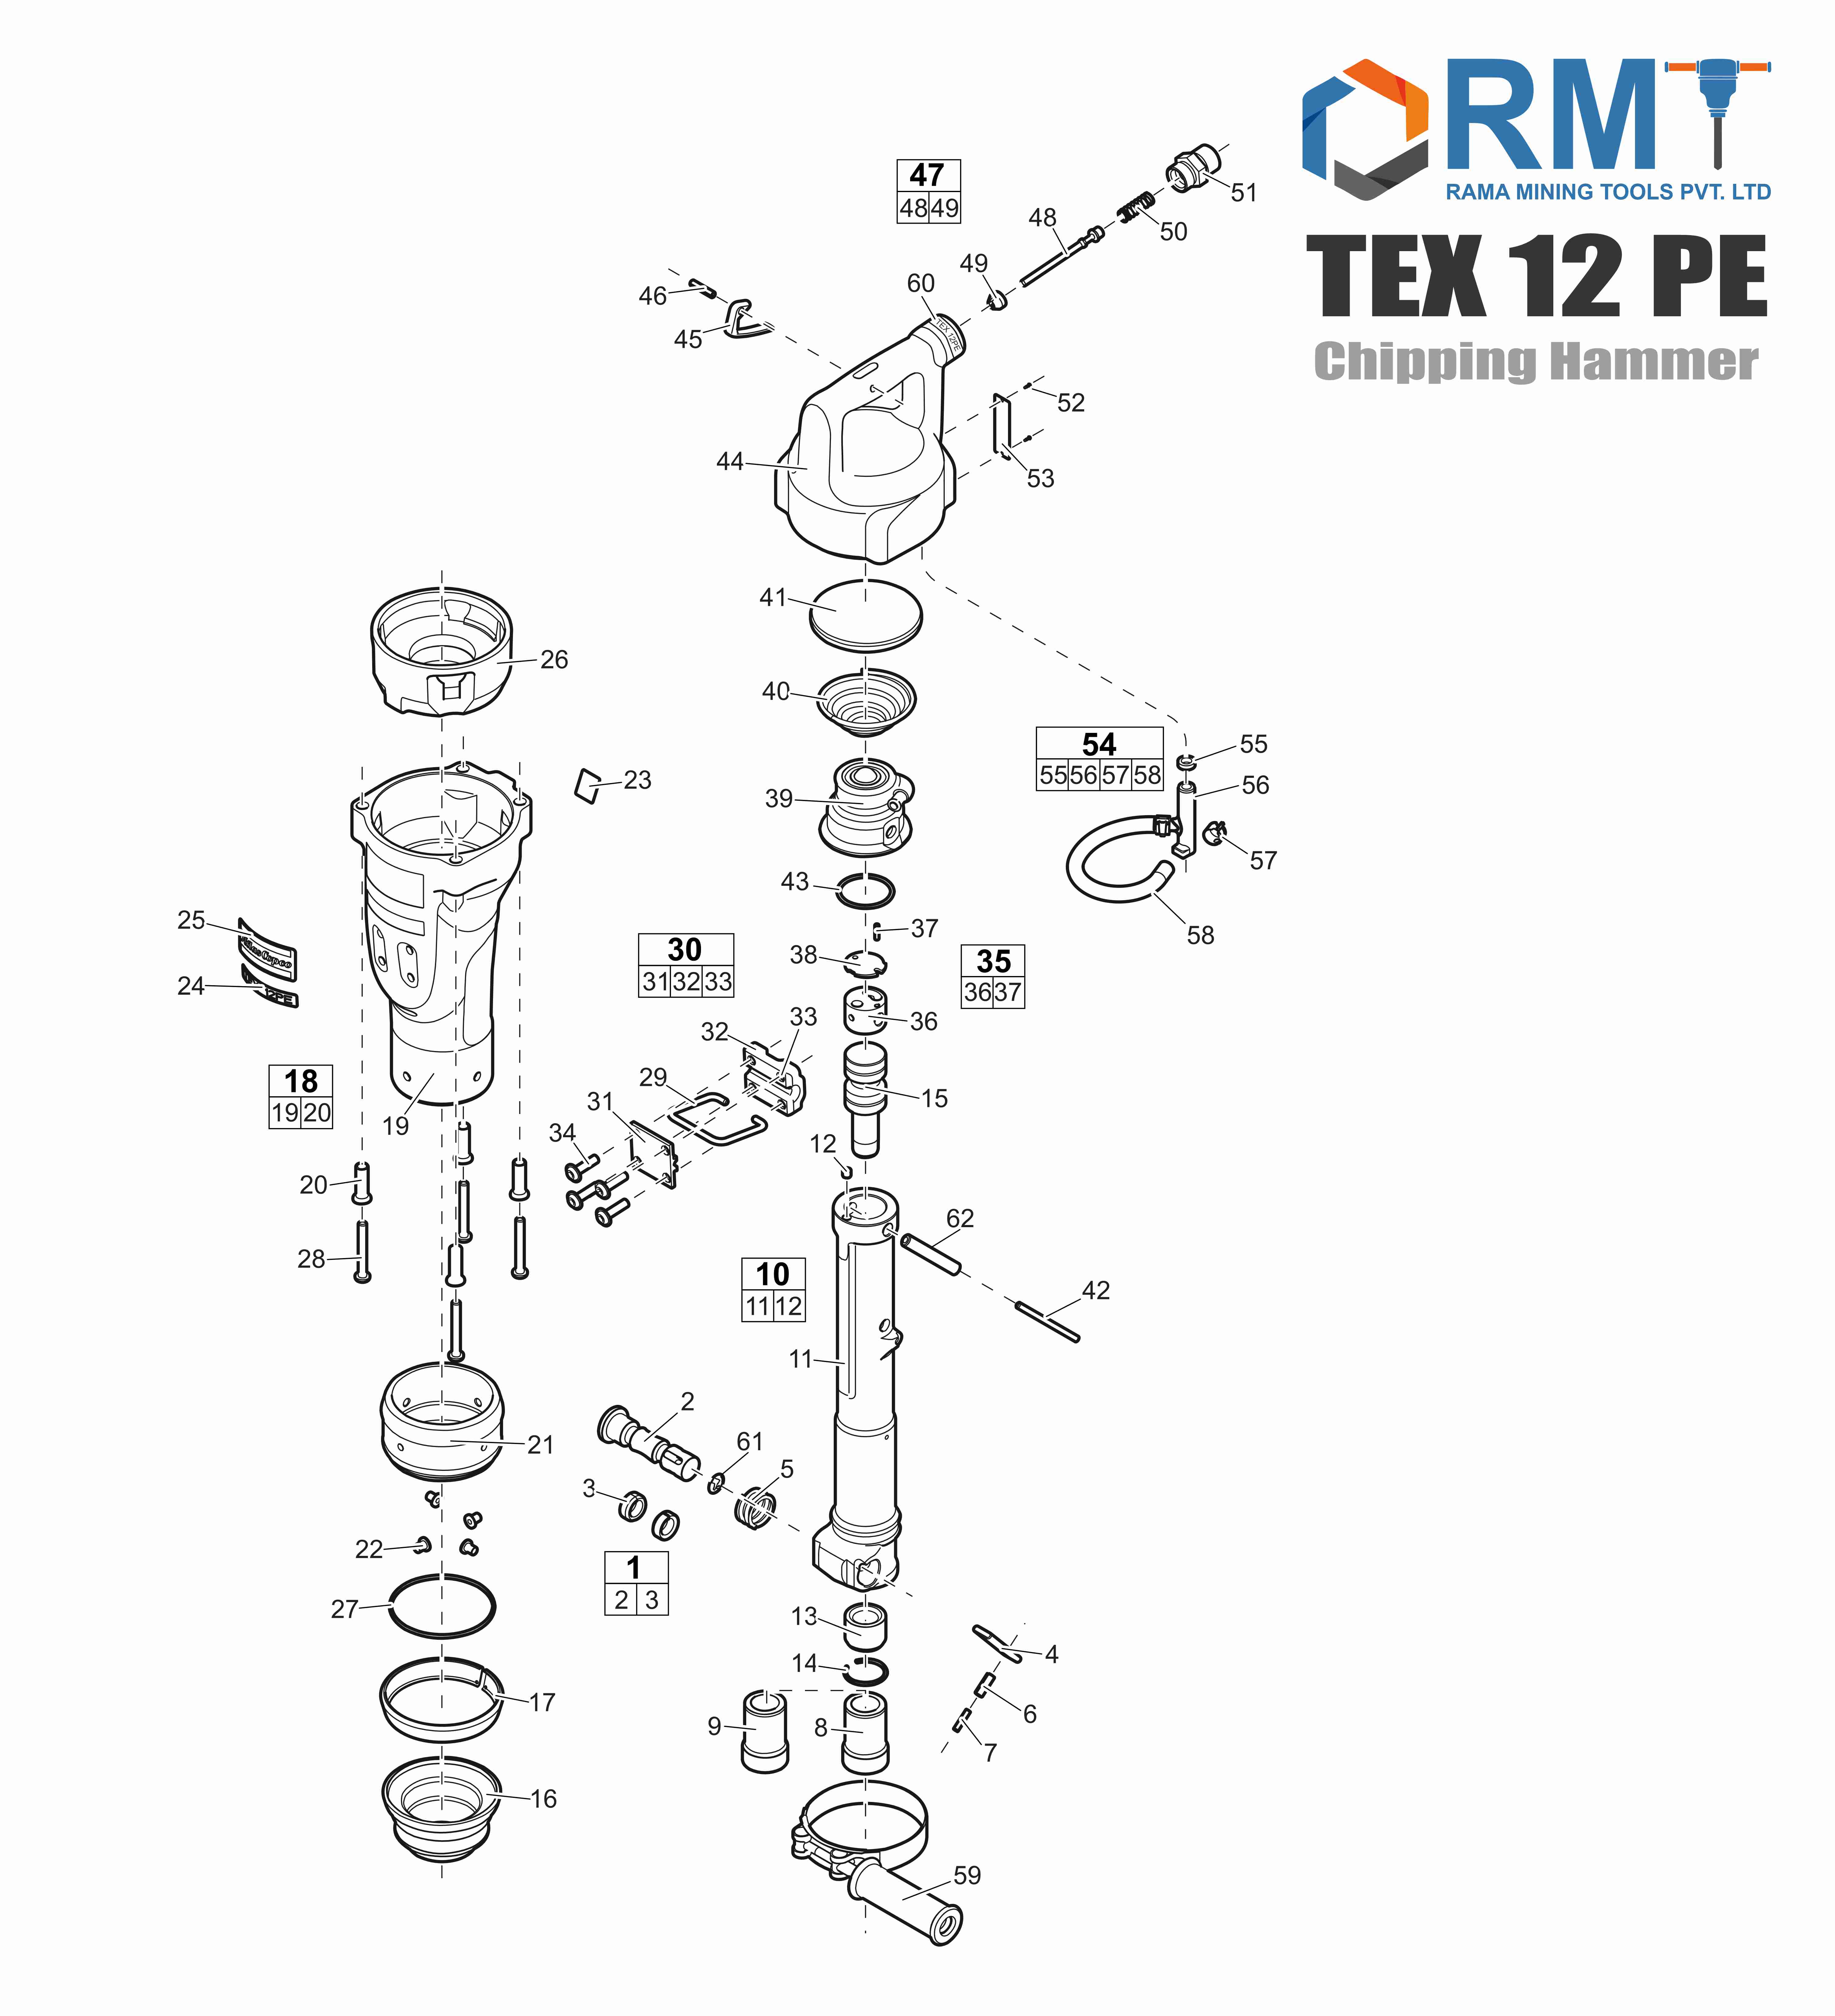 TEX 12 PE - Chipping Hammer